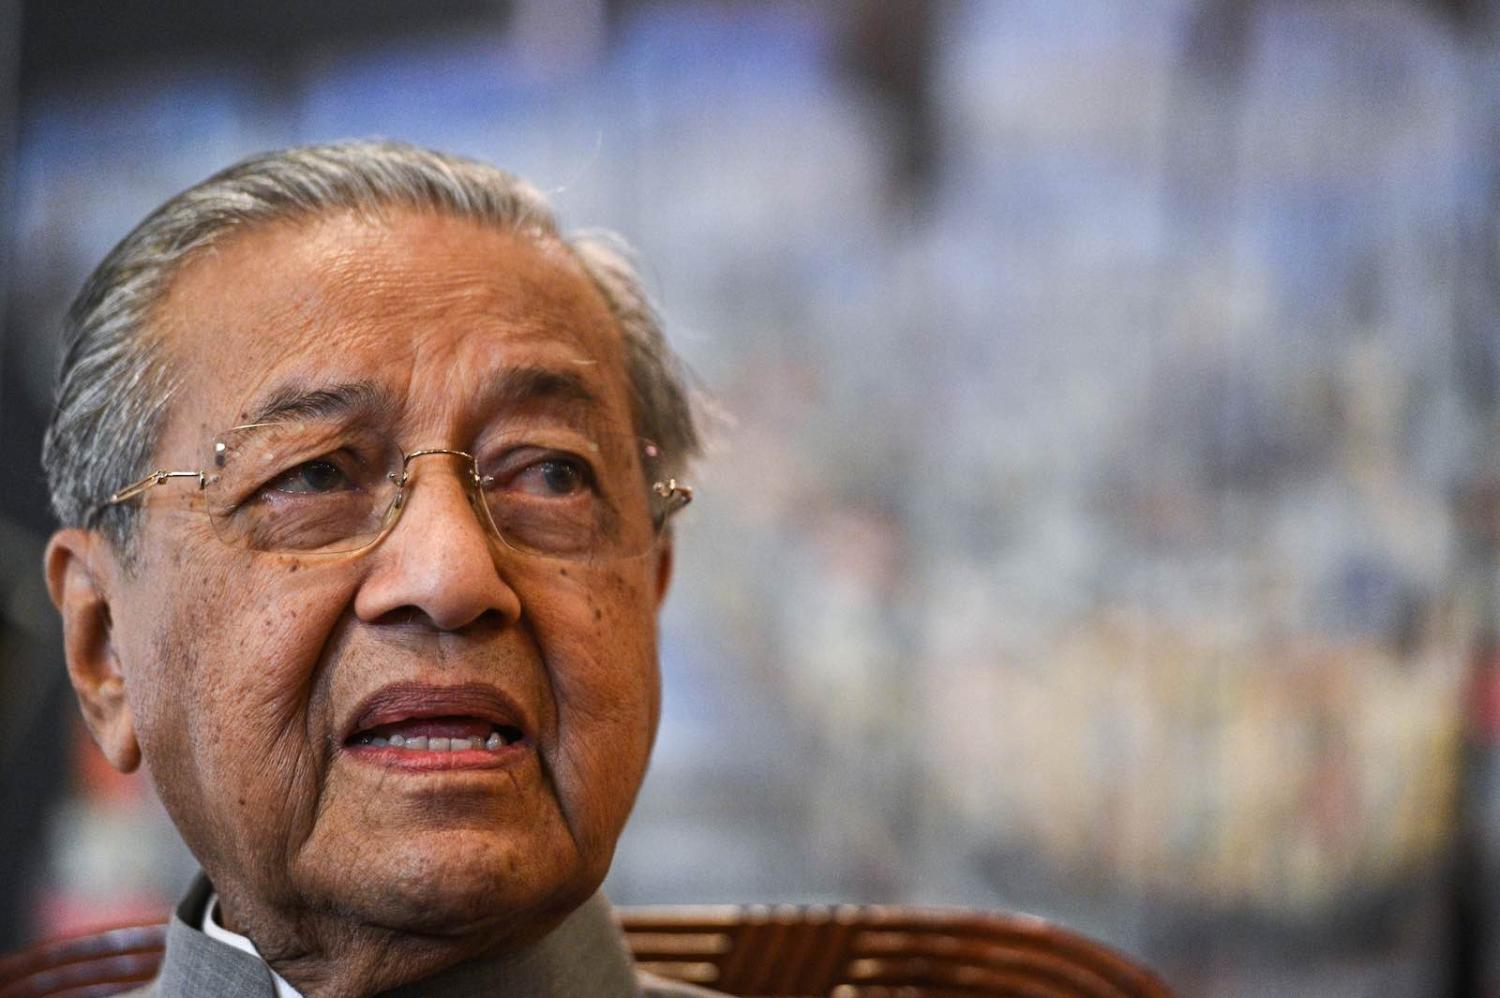 Handing power to Anwar risks significantly diminishing Mahathir’s Bersatu Party’s influence (Photo: Mohd Rasfan via Getty)